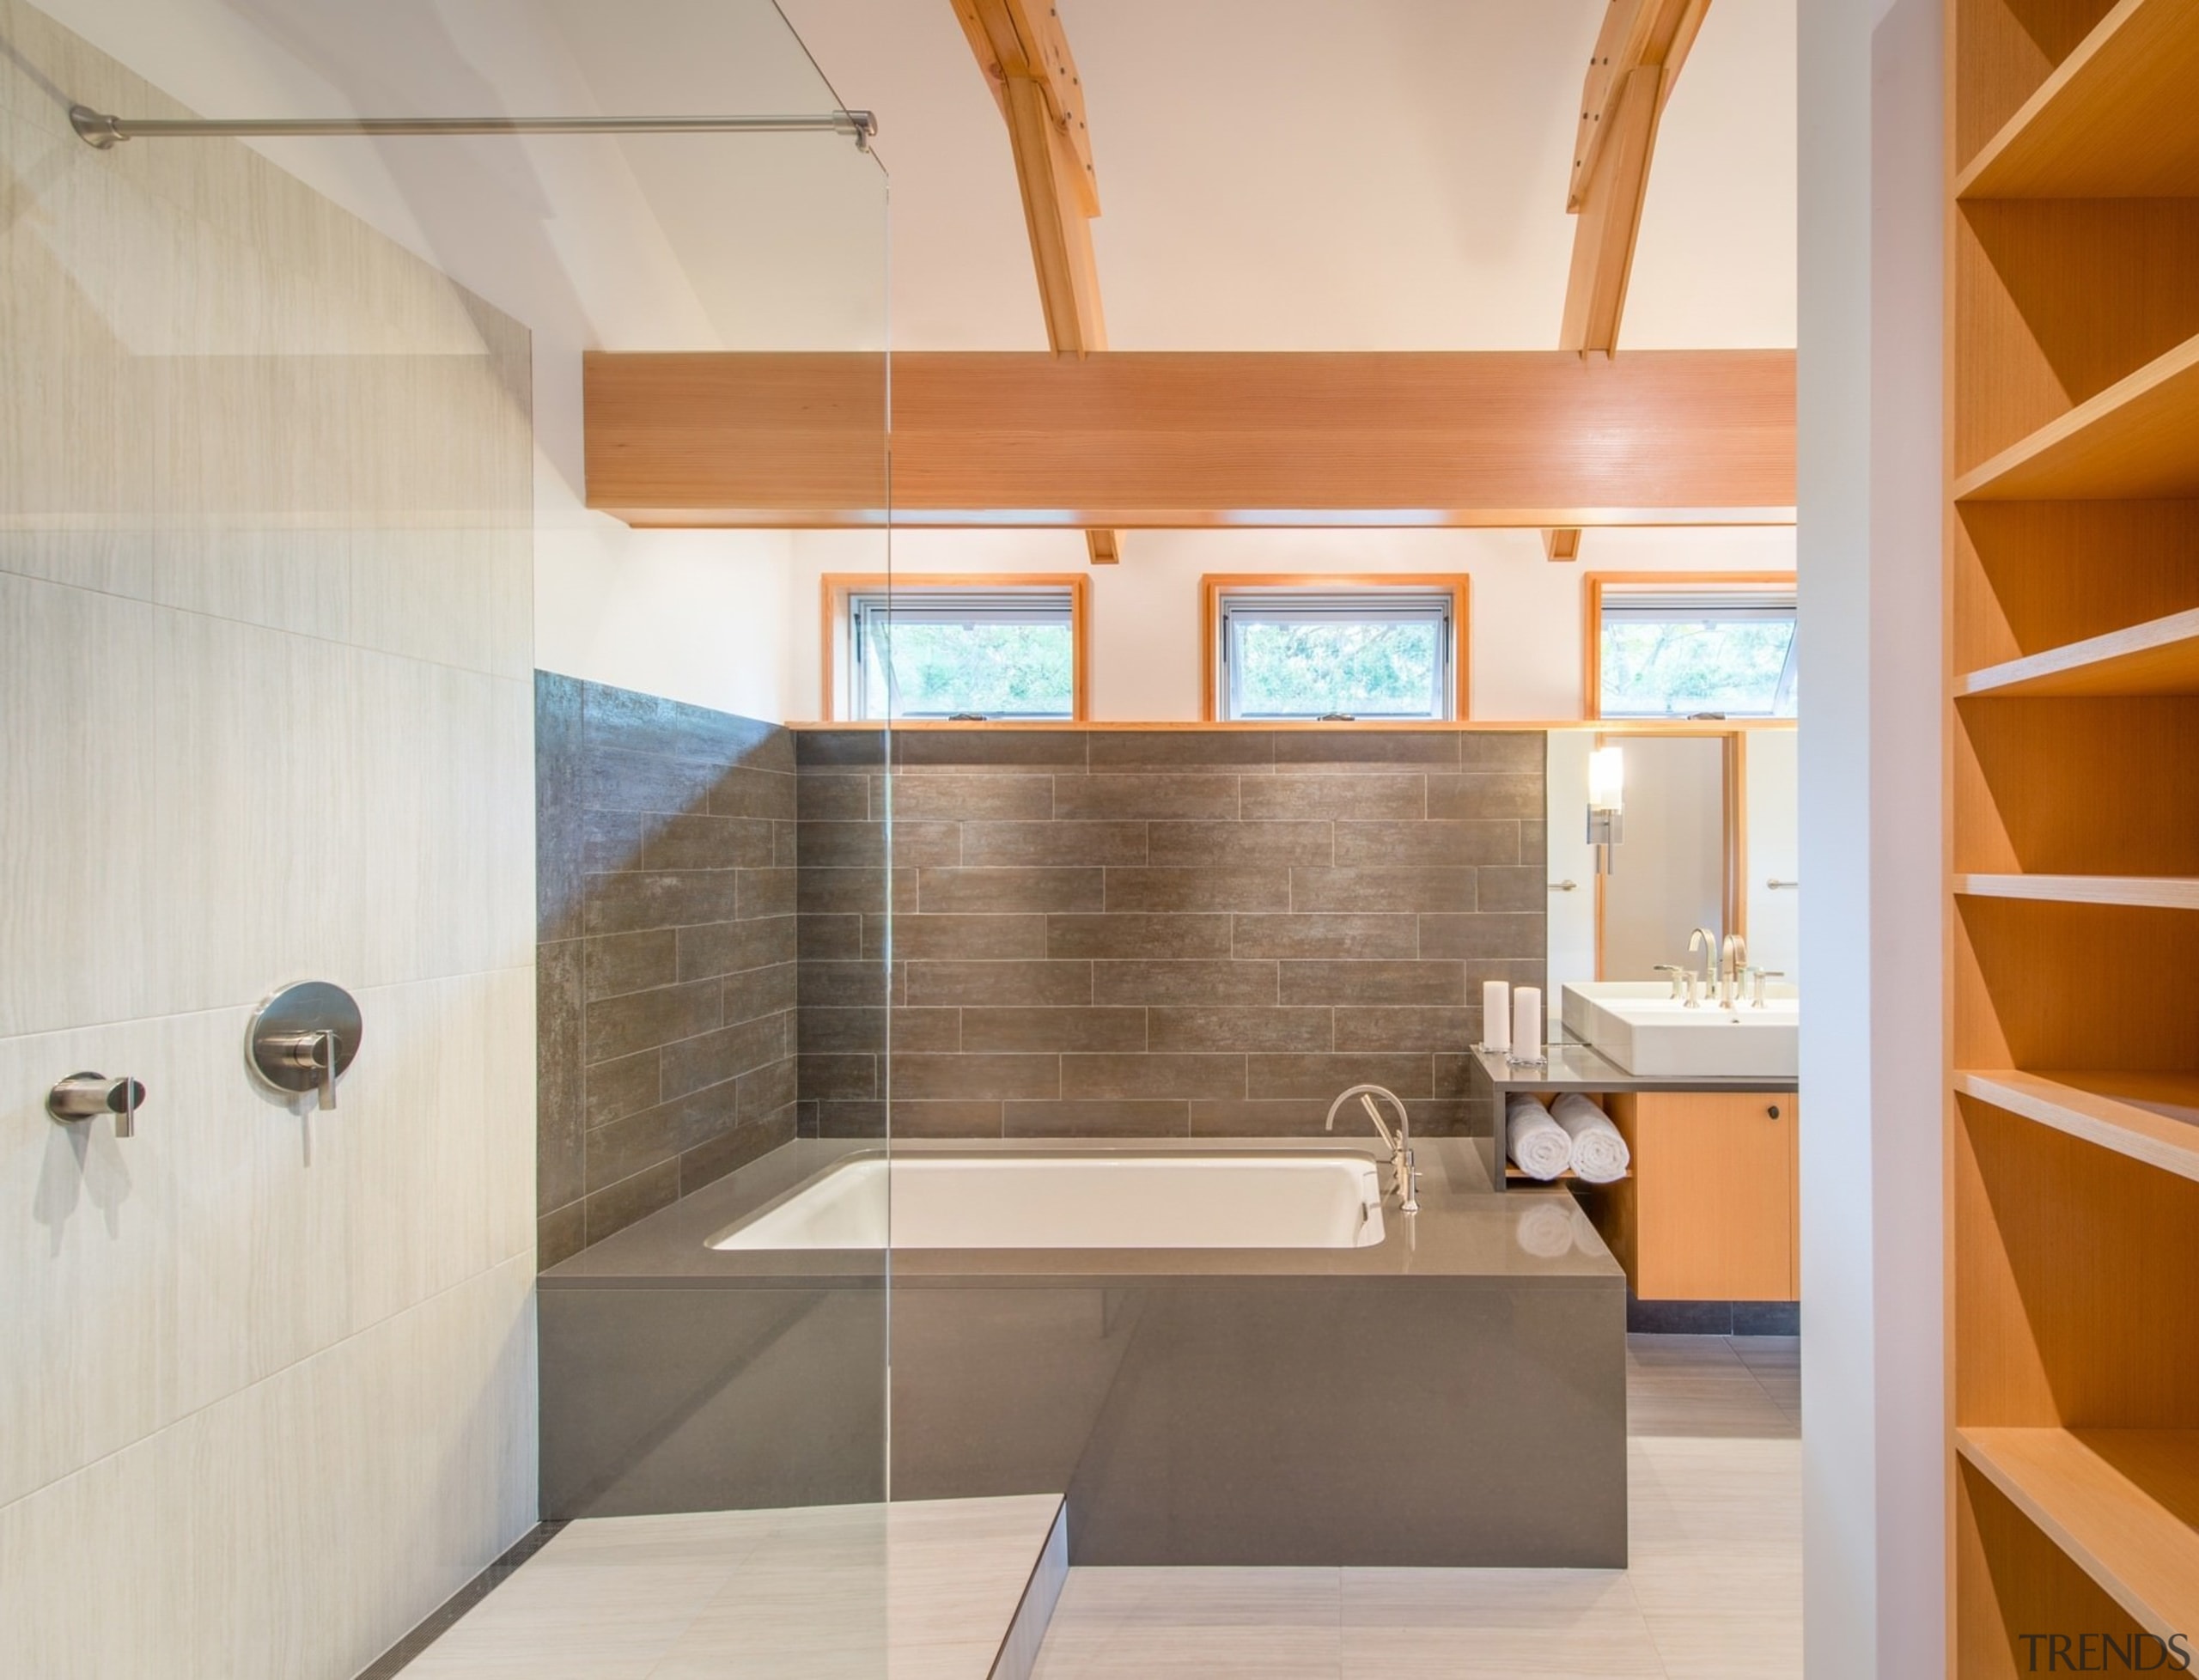 A spa-like bathtub in this large bathroom - architecture, bathroom, countertop, floor, interior design, real estate, wood, gray